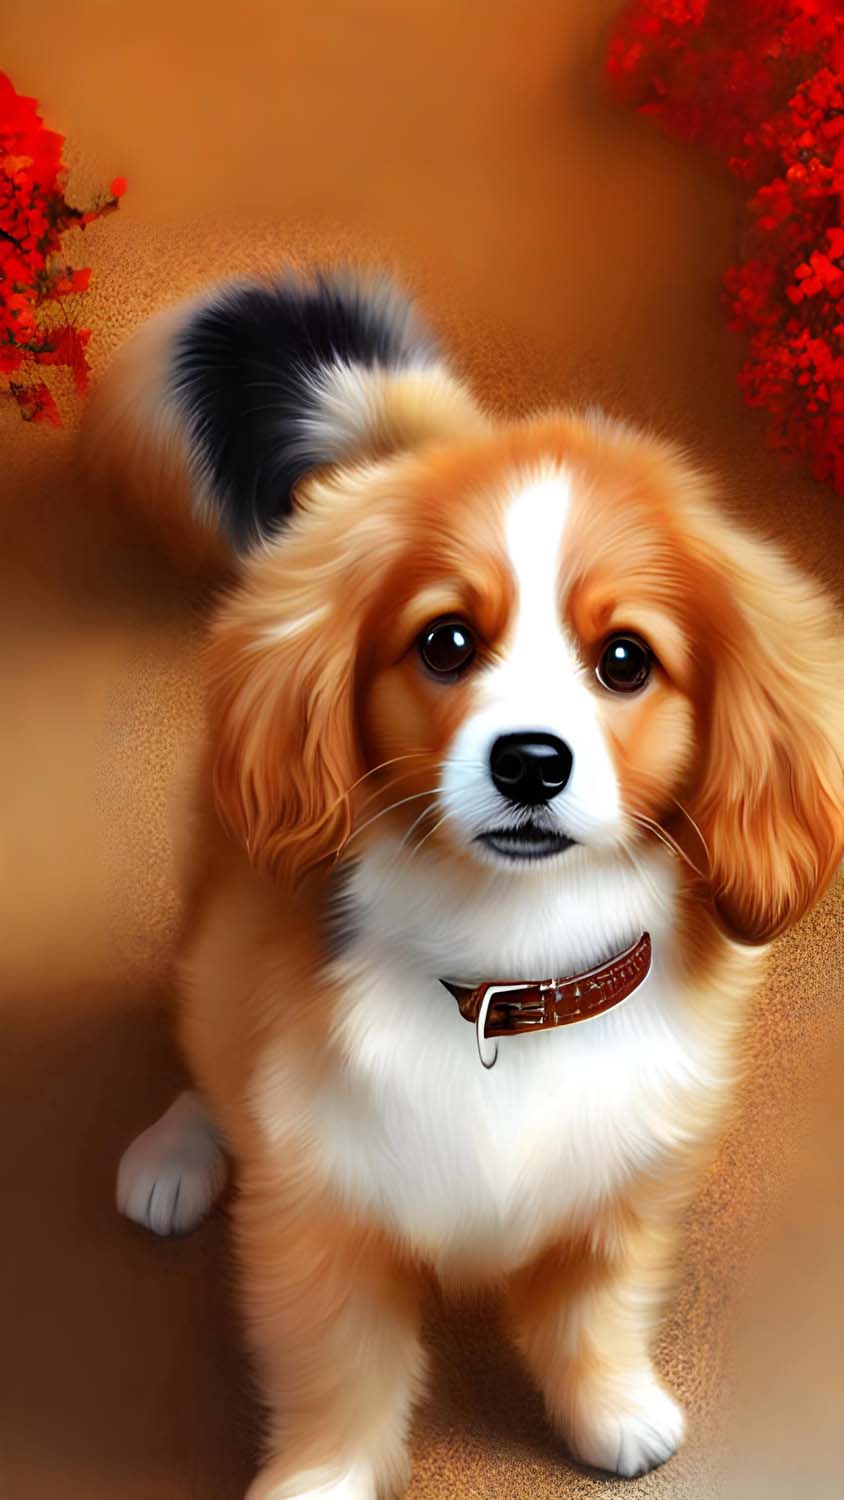 Cute Puppy iPhone Wallpaper HD